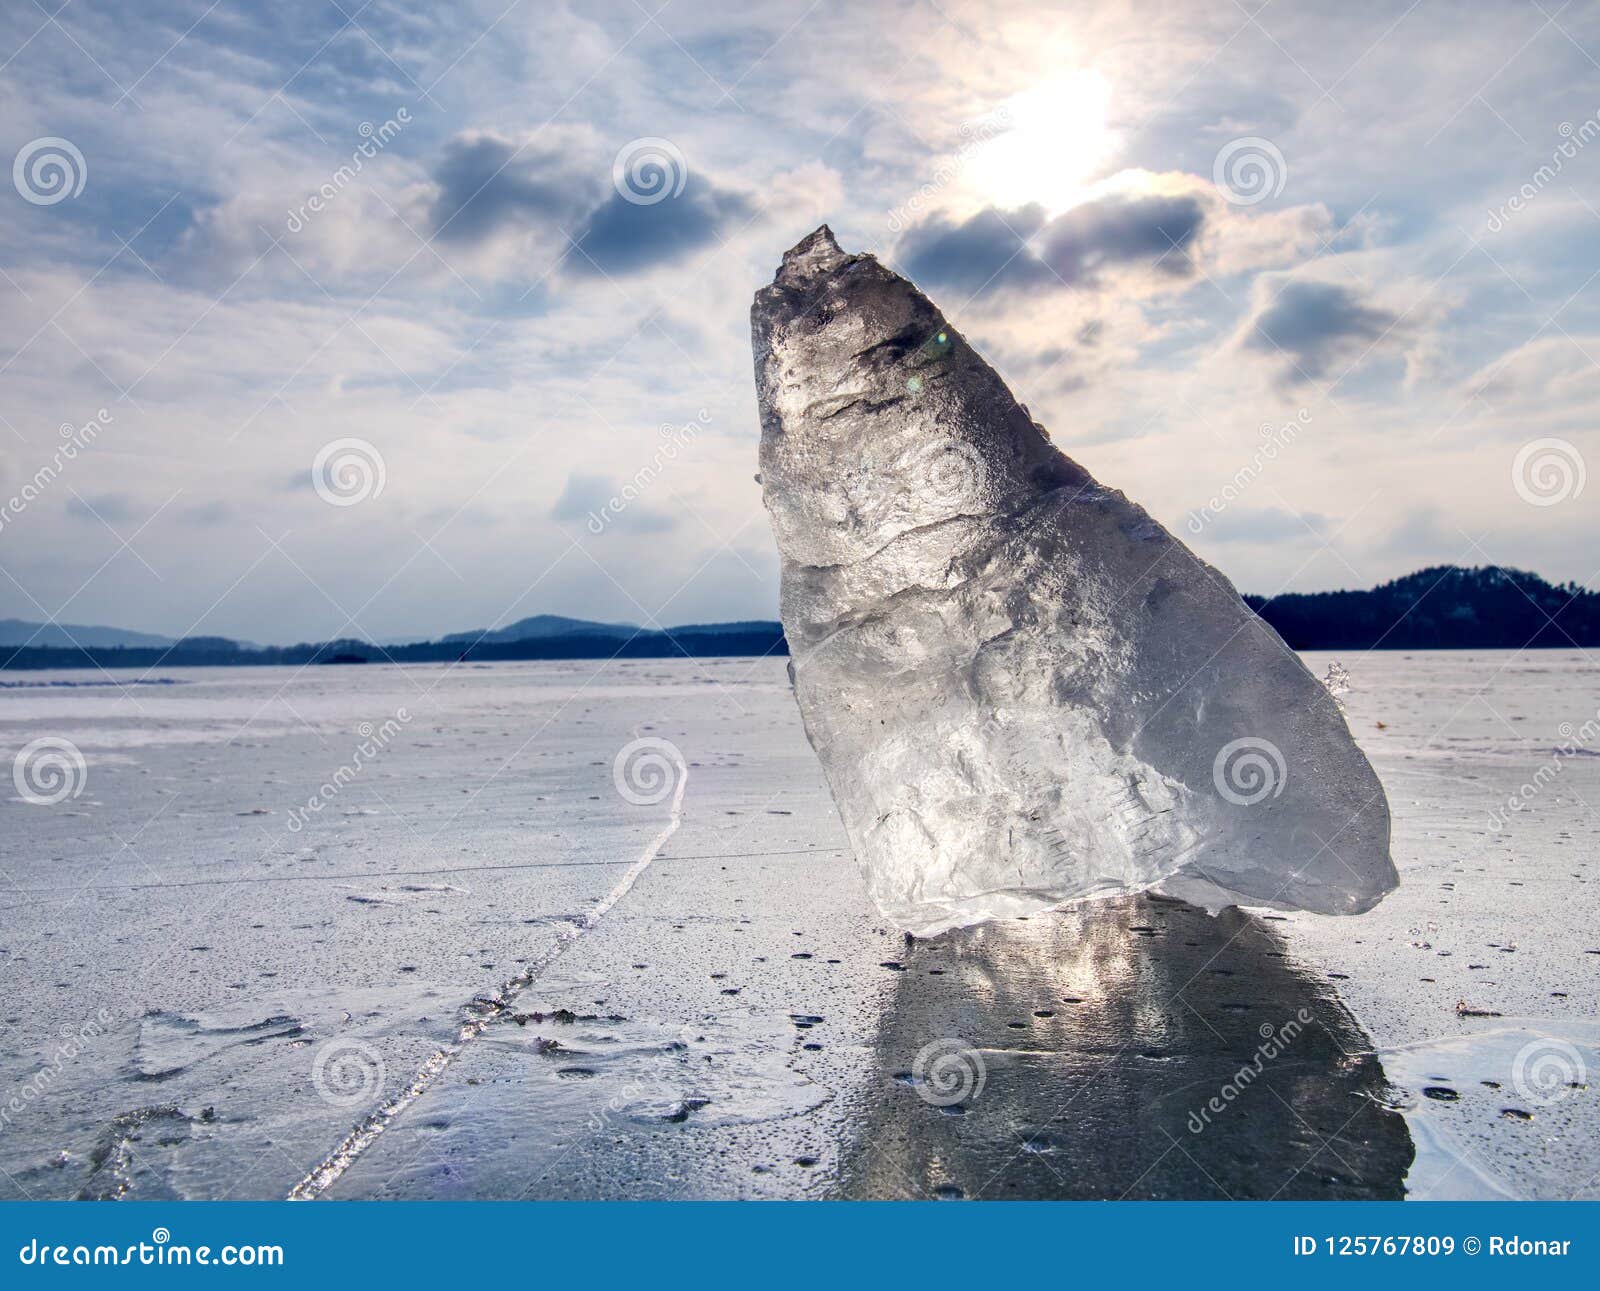 Iceberg or Ice Piece on Large Floe. Sharp Ice that Has Broken Off ...